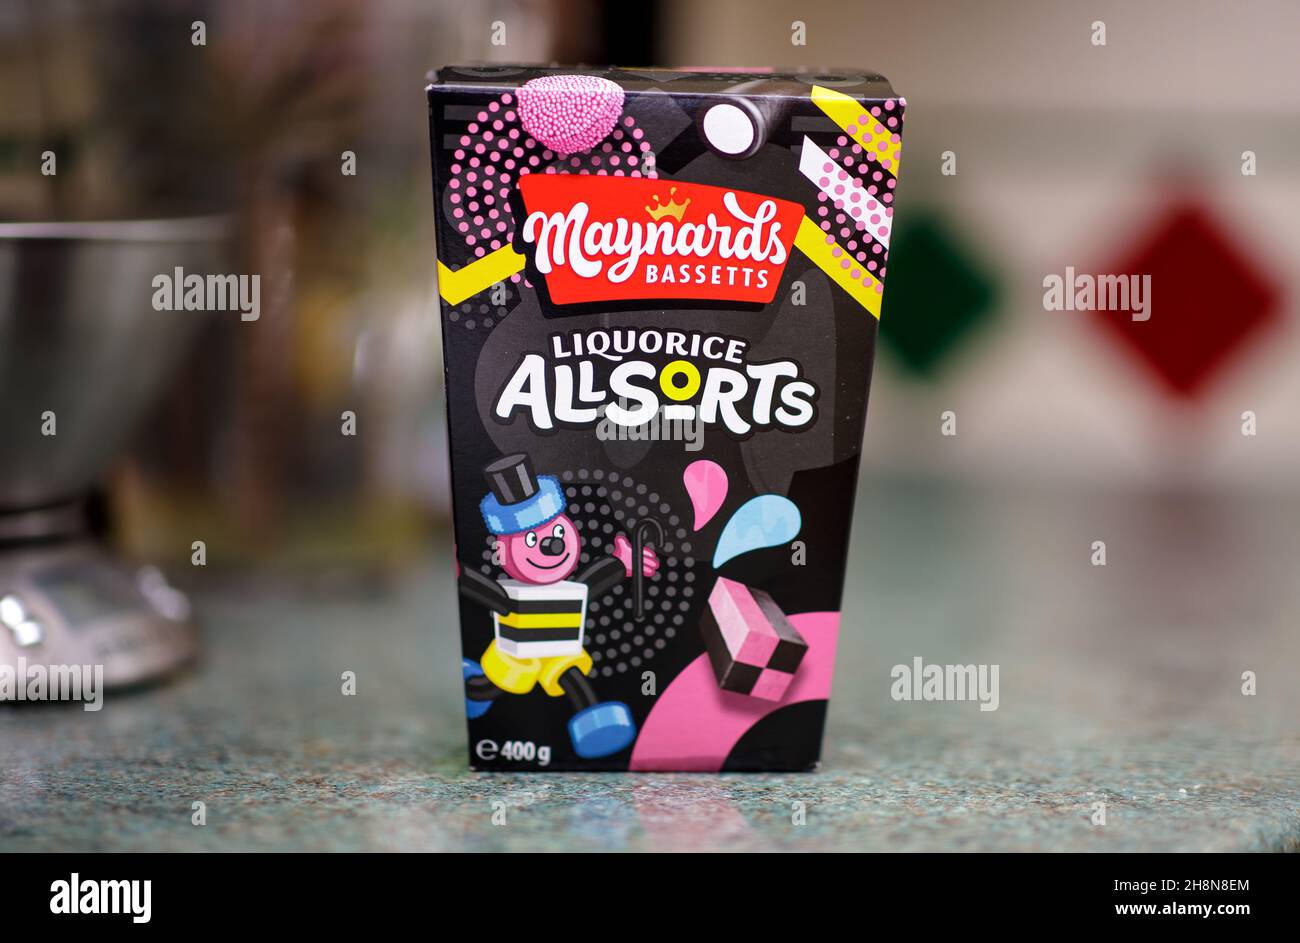 A gift size box of Maynards Bassetts liquorice allsorts in a kitchen, UK. Stock Photo